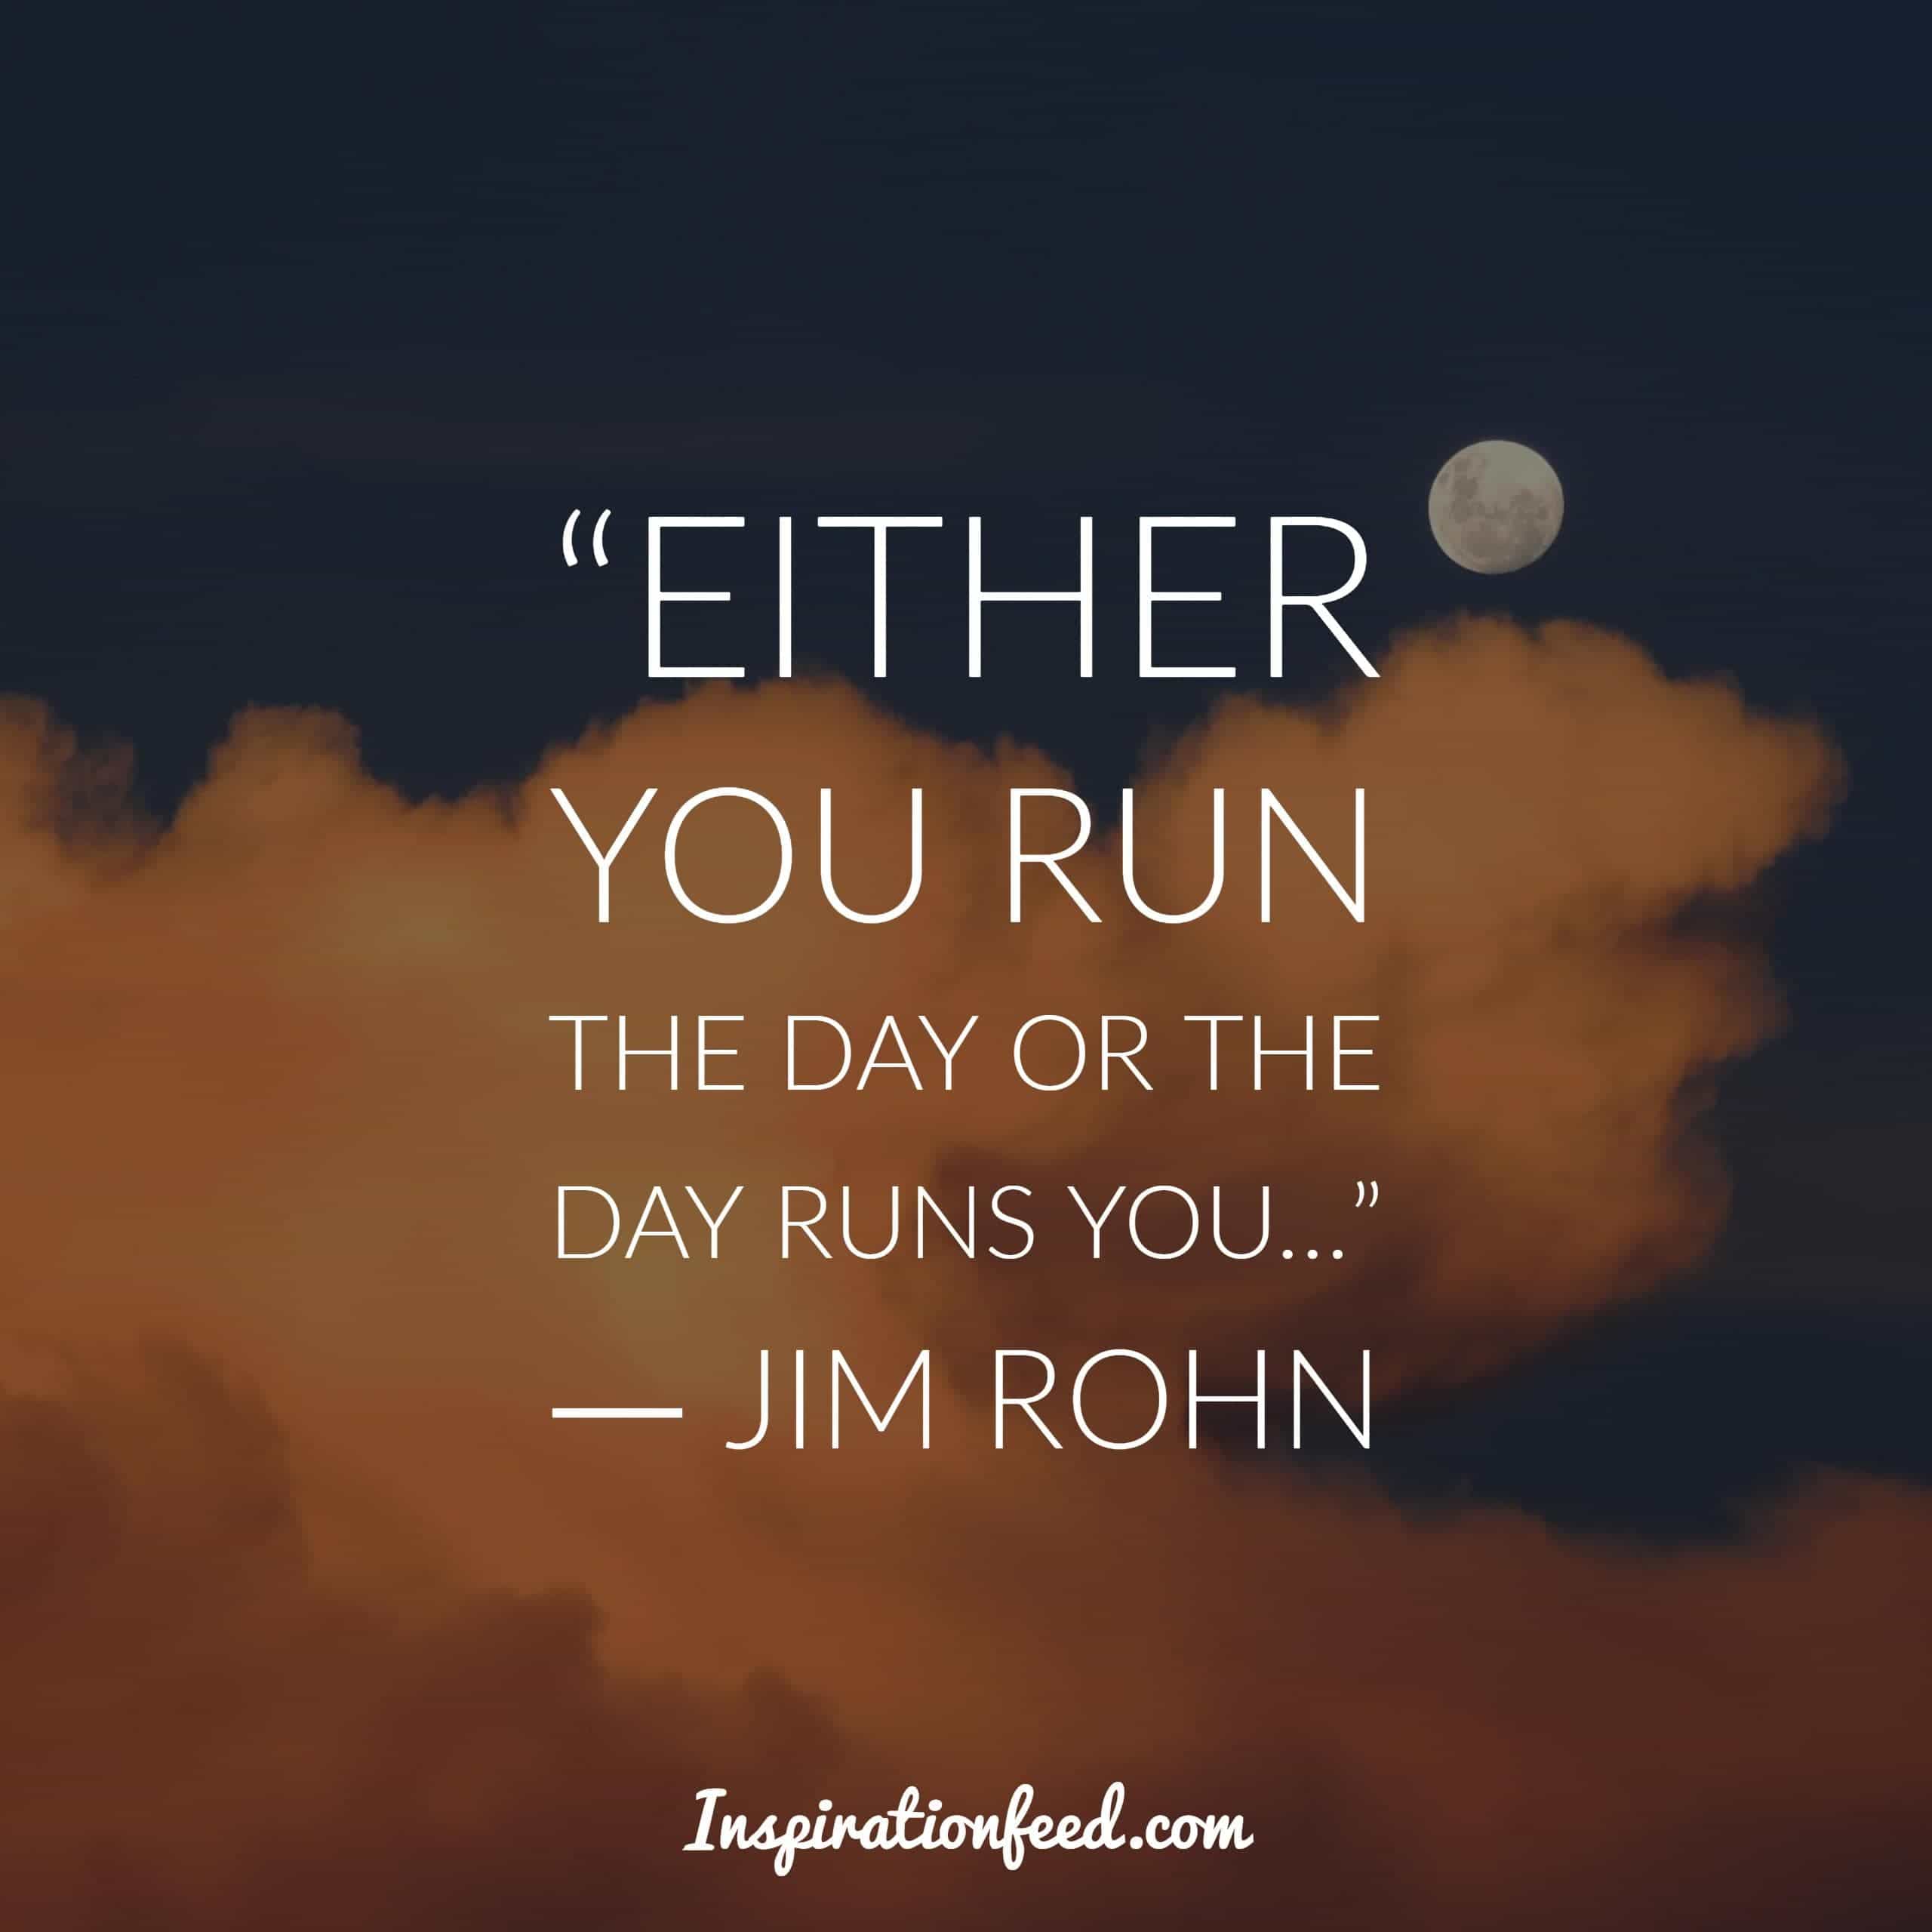 Top 20 Motivational Jim Rohn Quotes | Inspirationfeed